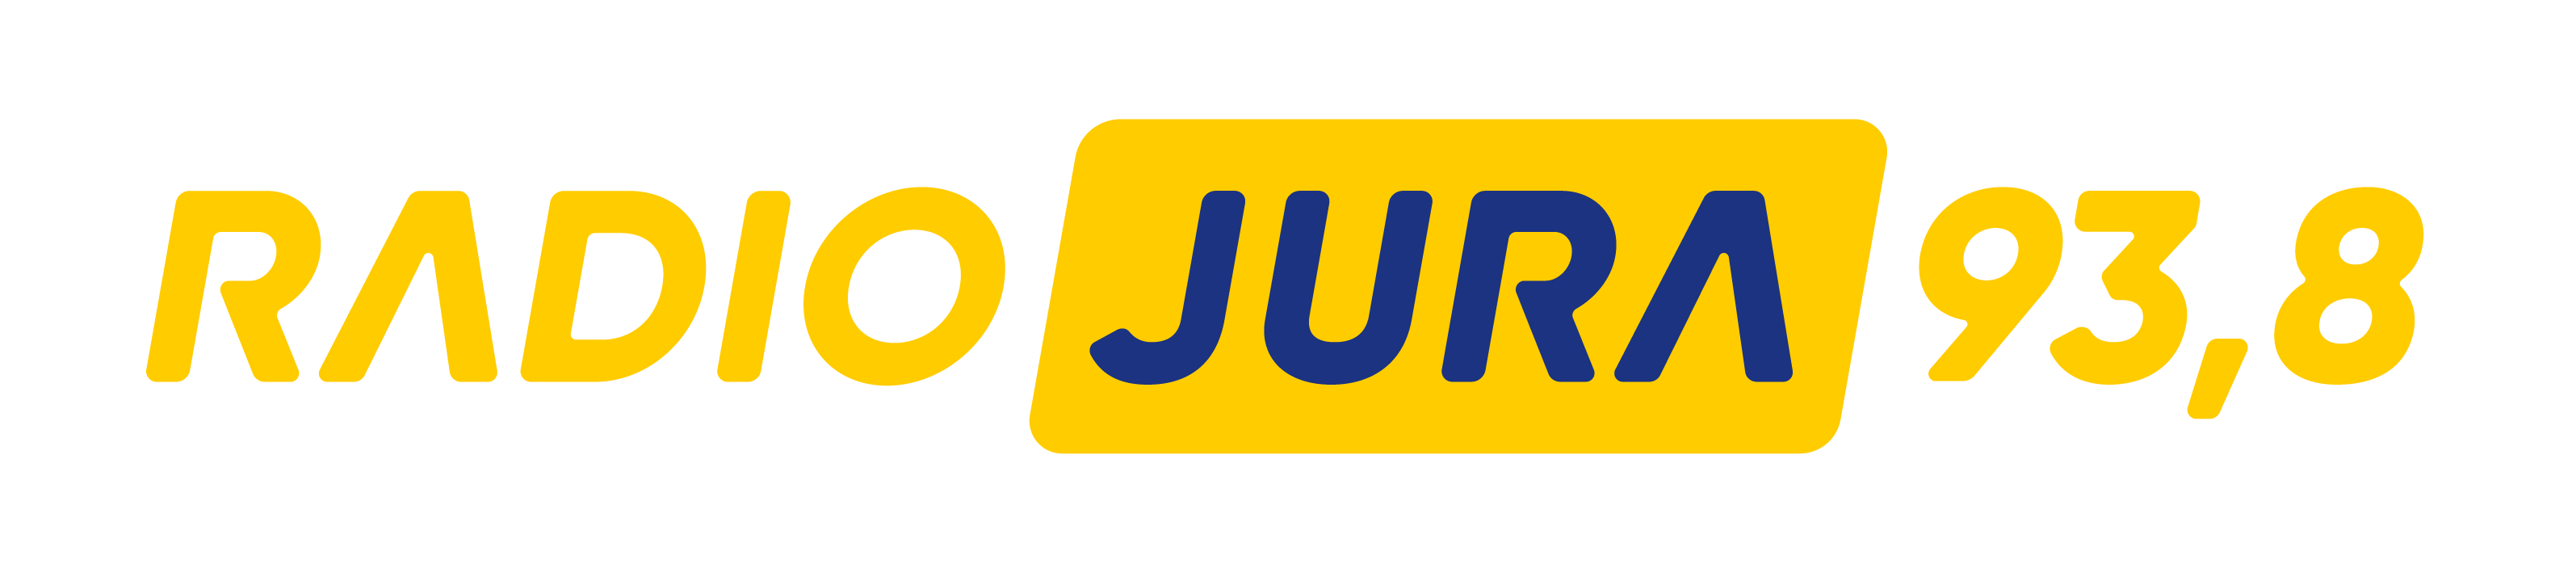 Radio Jura Home